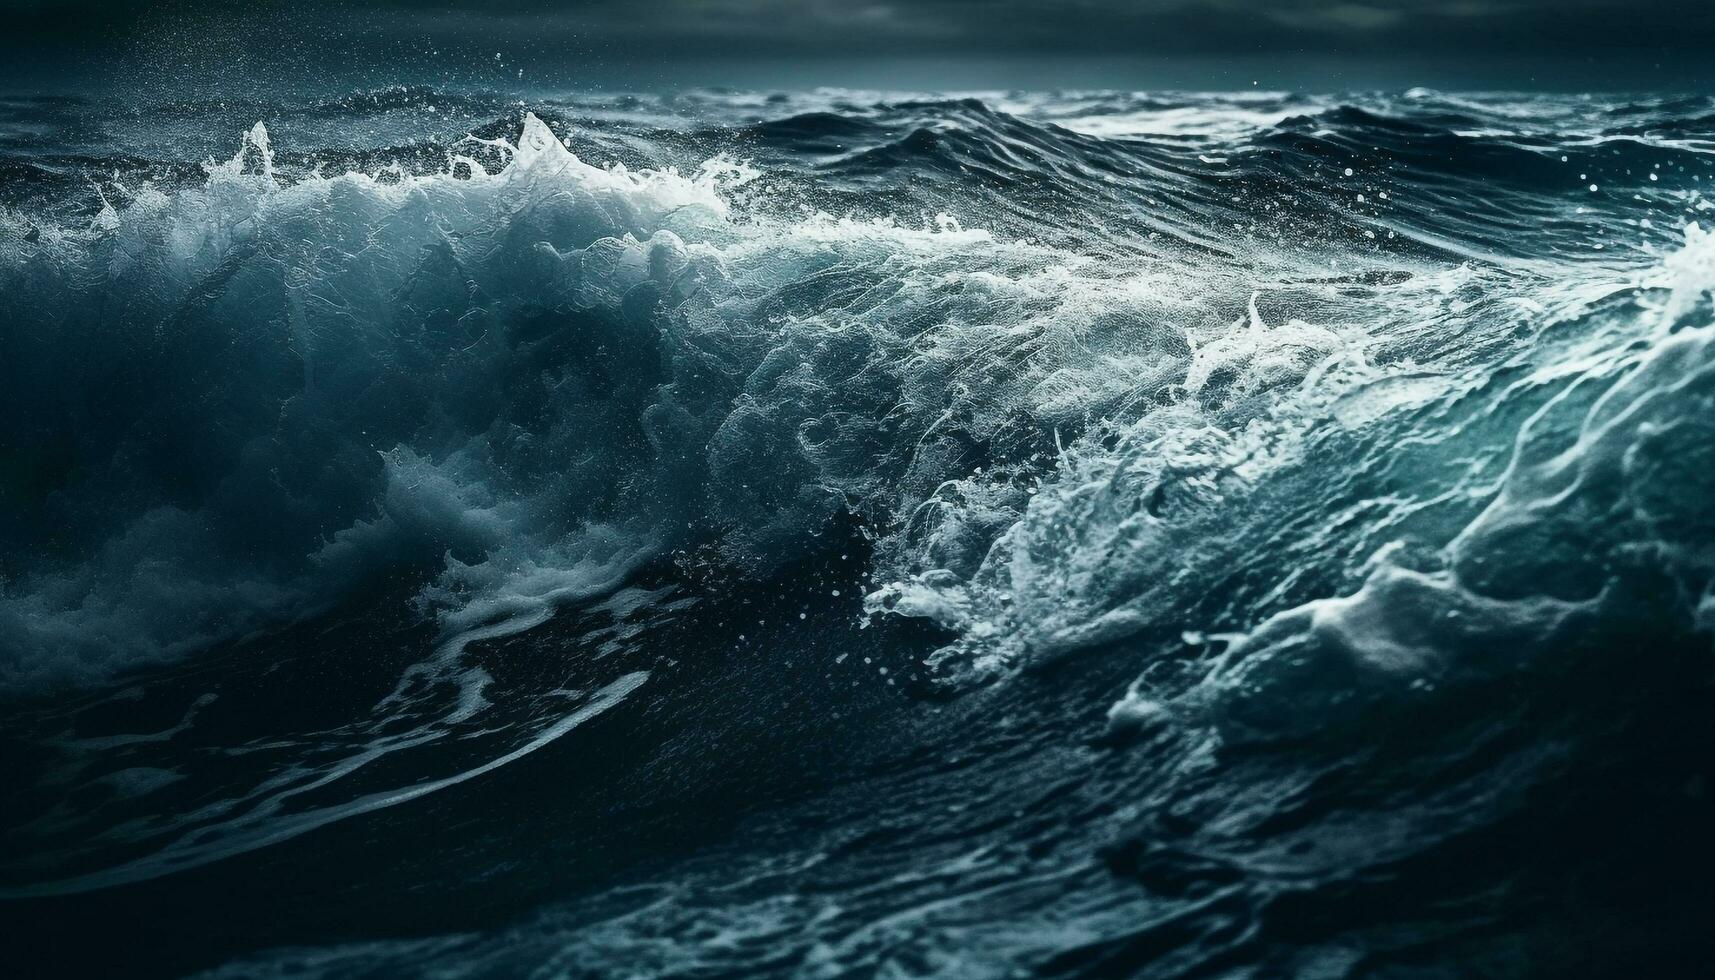 Blue wave crashing, splashing in nature beauty generated by AI photo